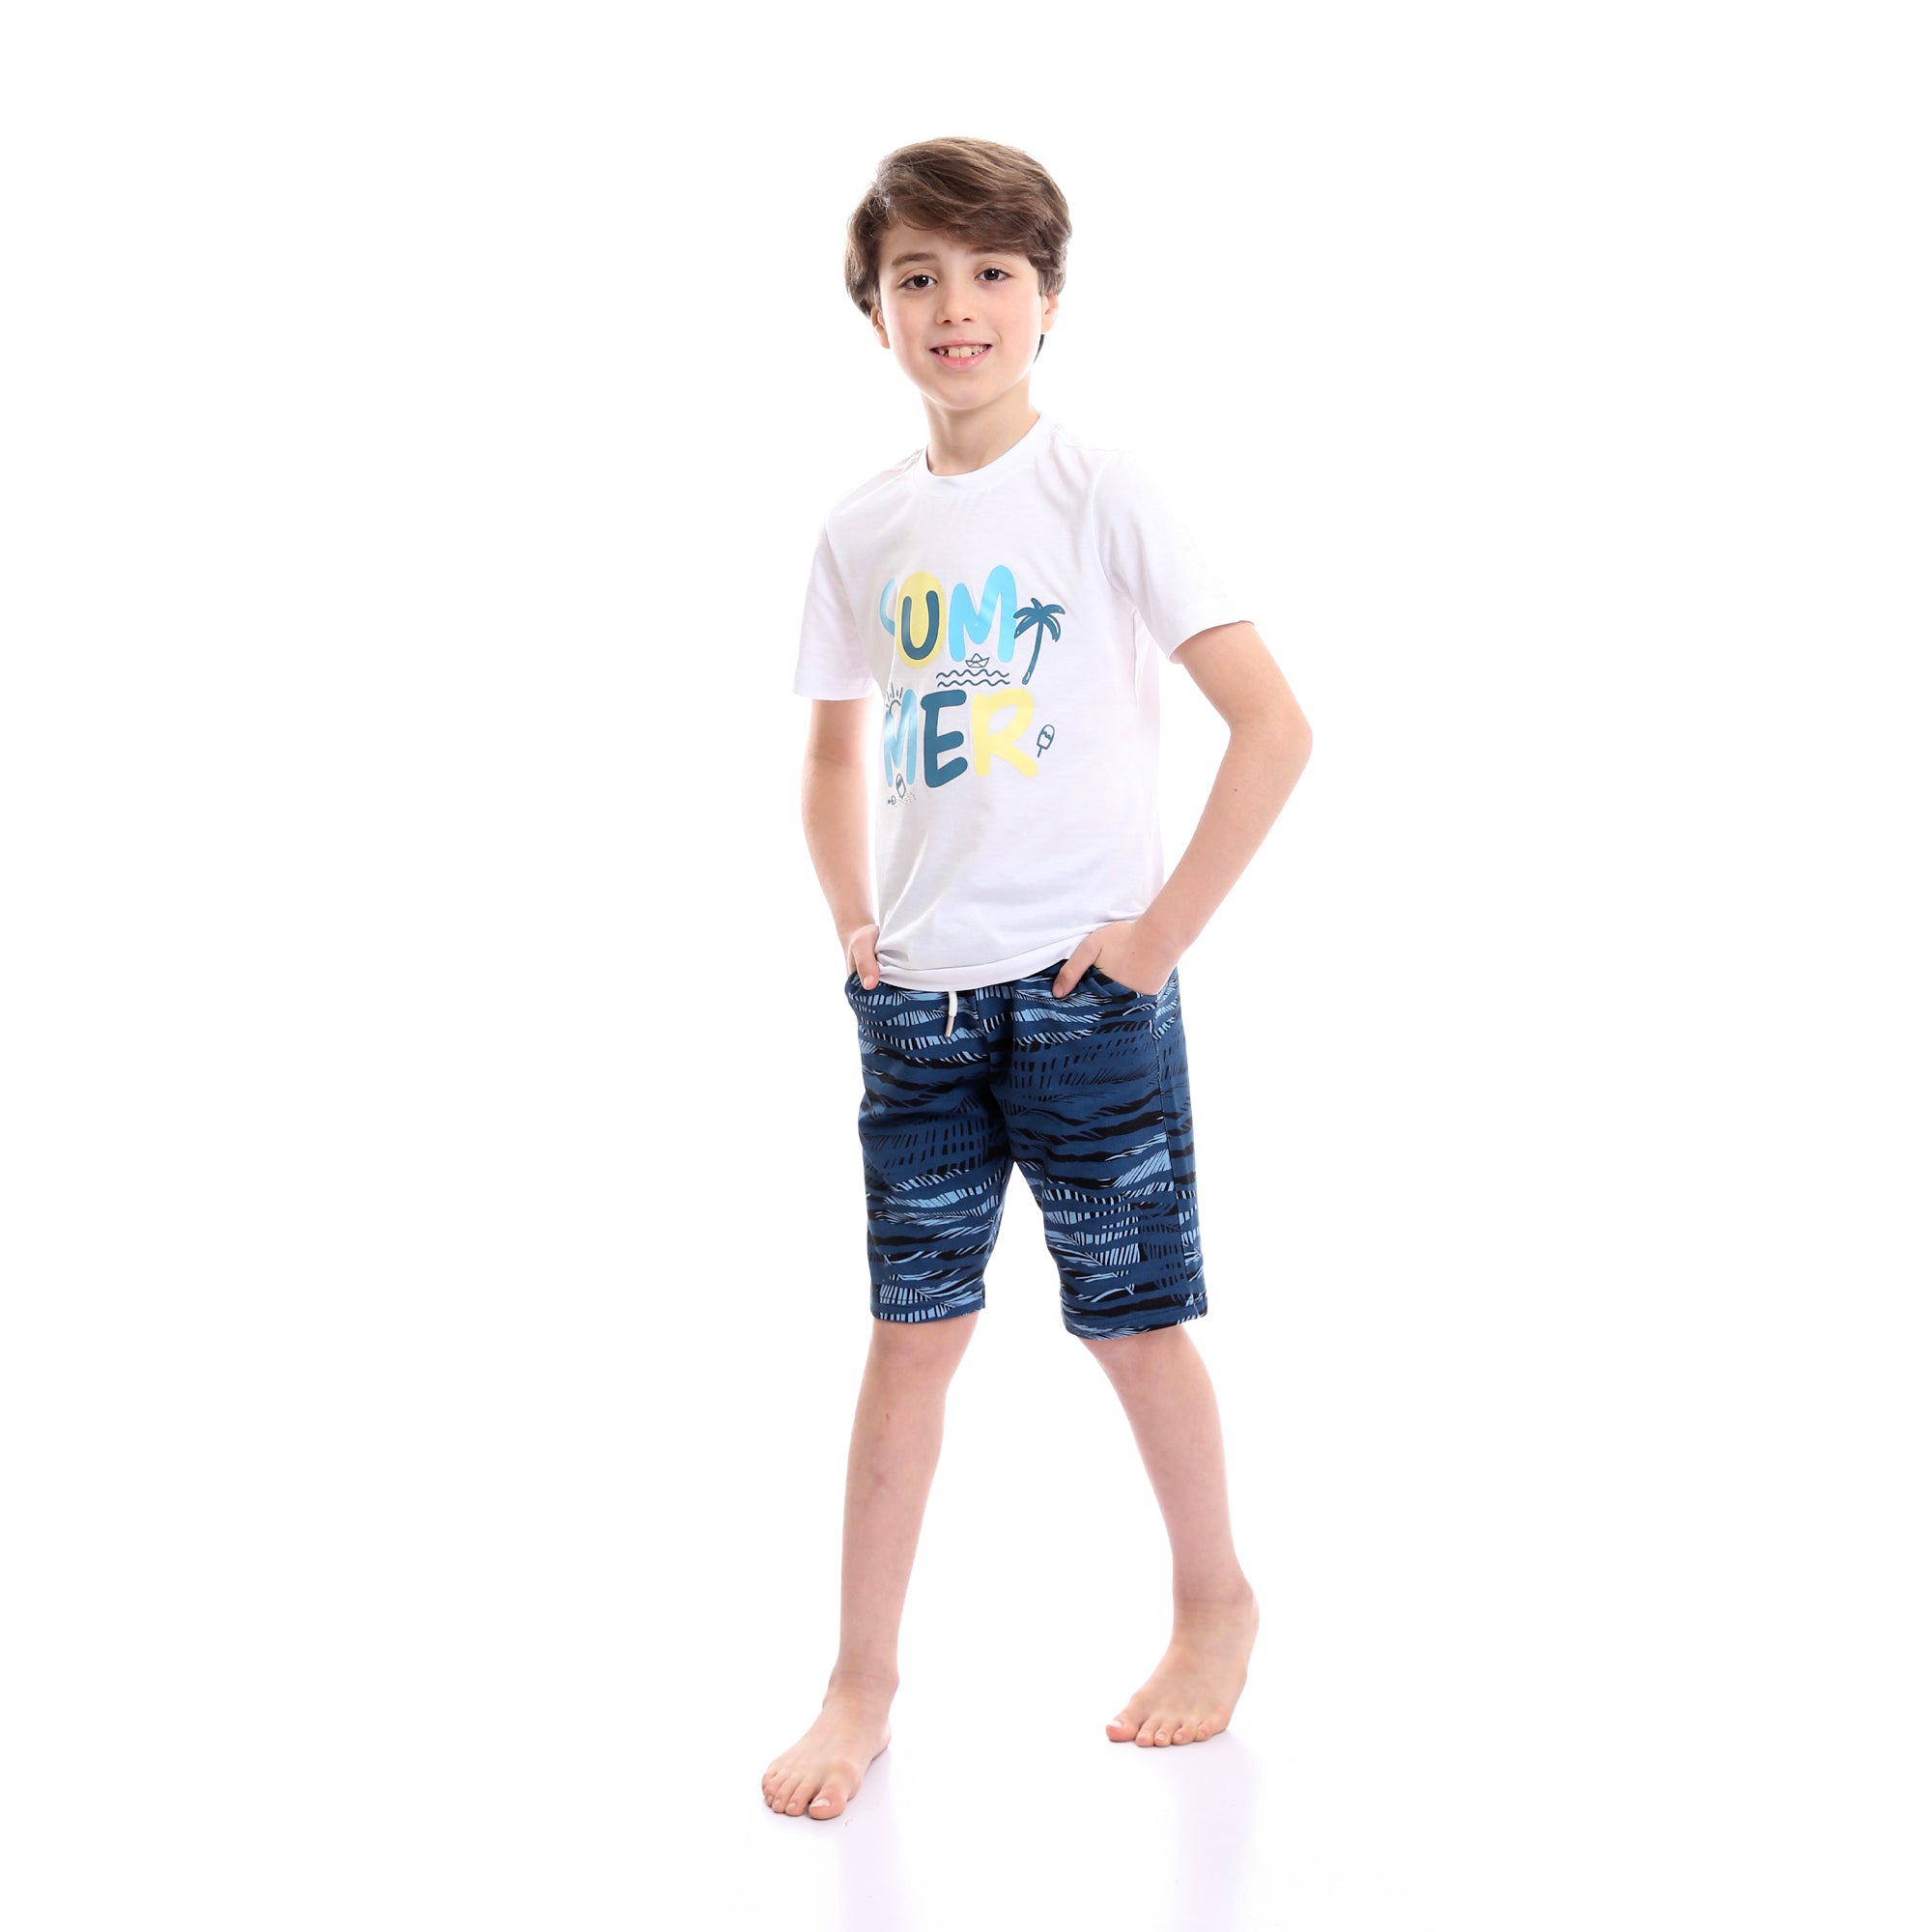 Boys Printed Colorful Summer & Shorts Pajama Set - White & Teal Blue